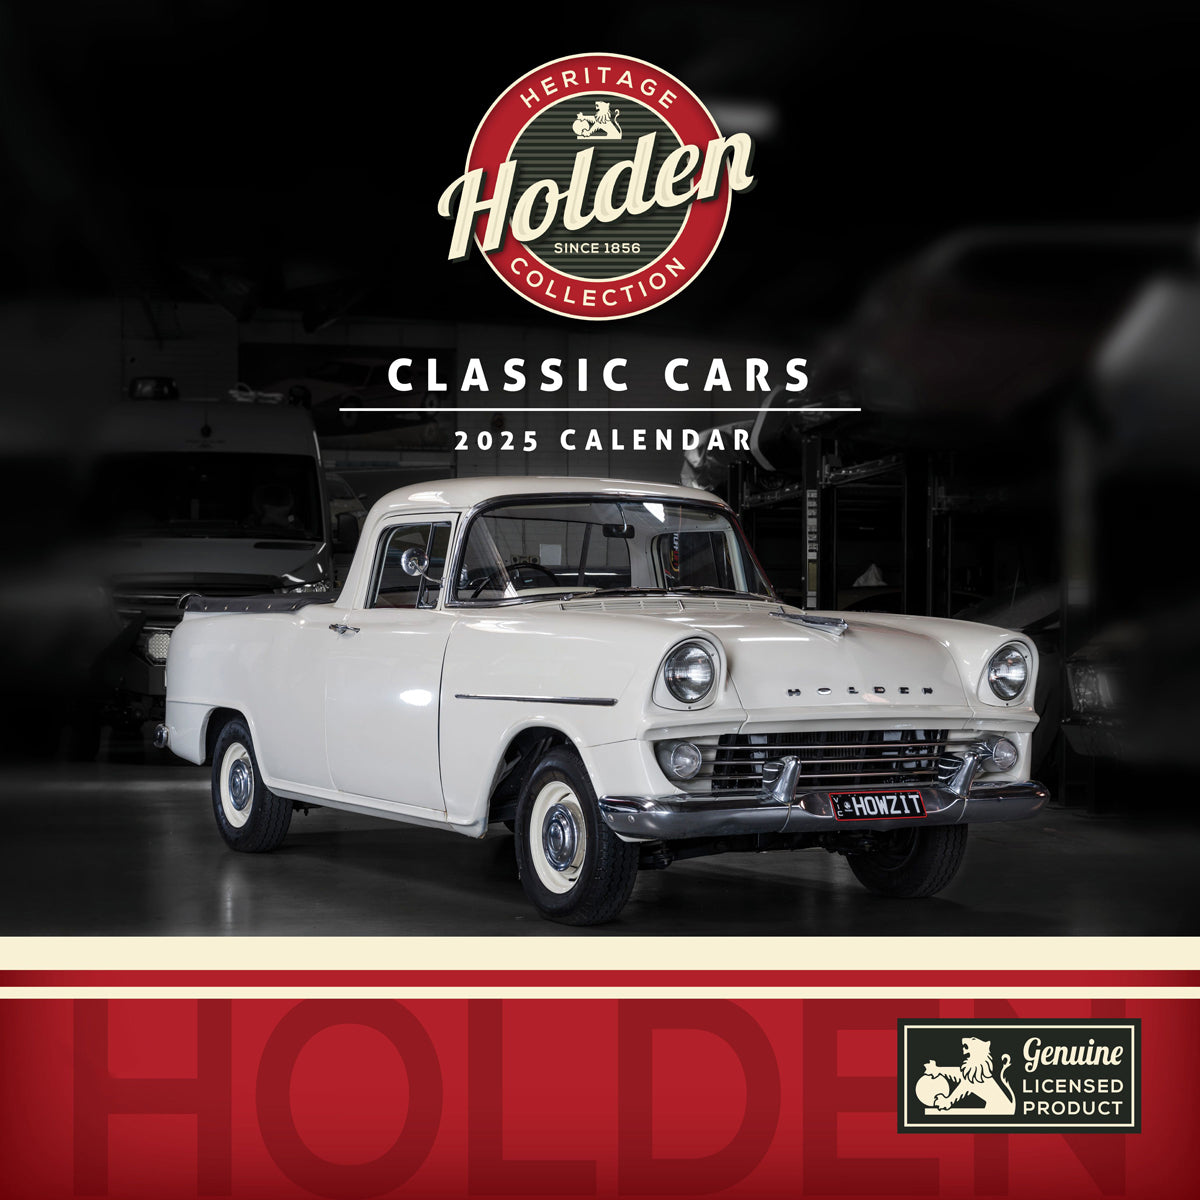 Classic Holden Cars 2025 Calendar